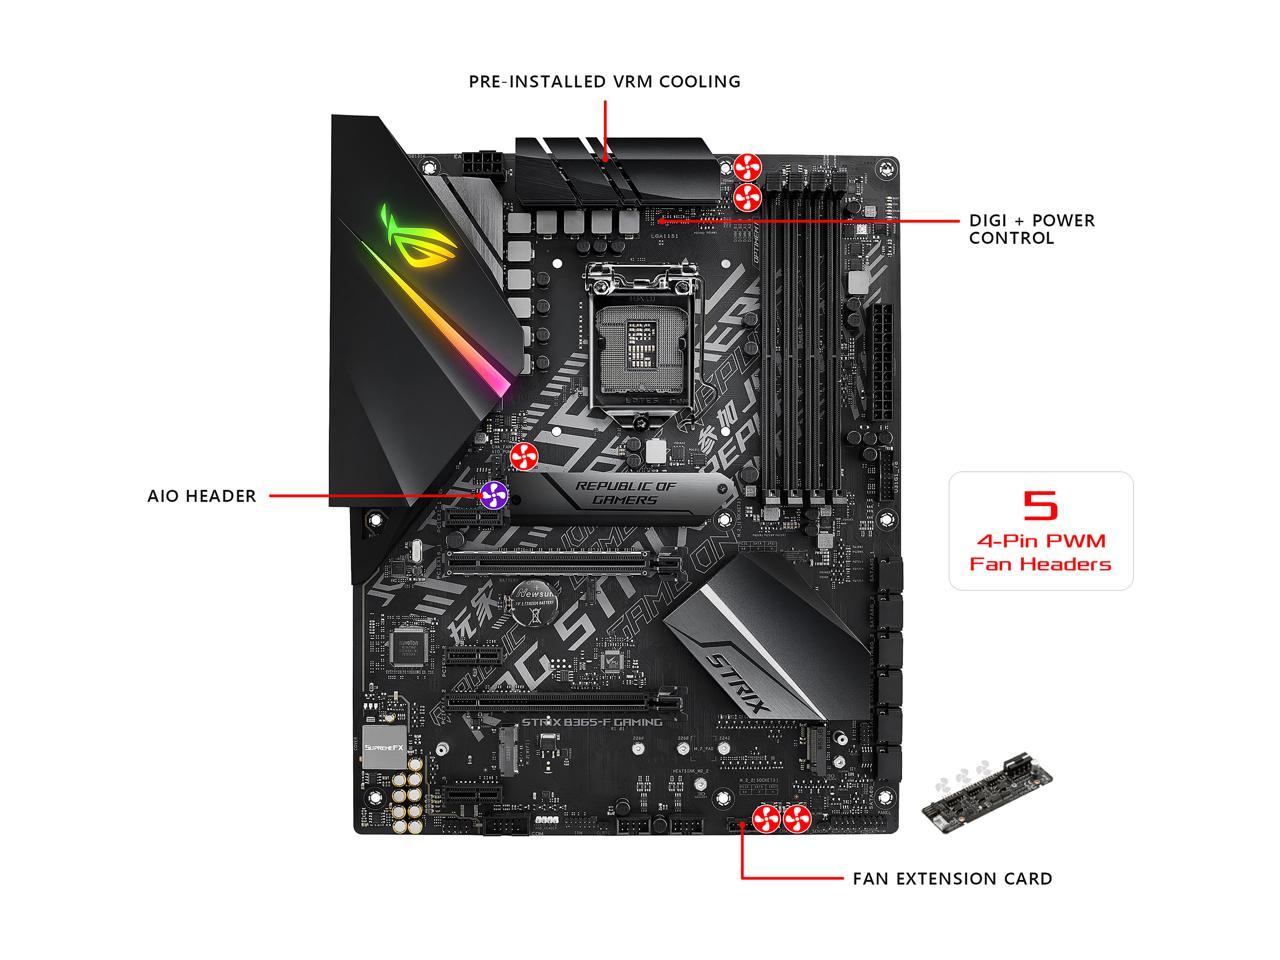 ASUS ROG STRIX B365-F GAMING Support 9th/8th Gen Intel Processor with Aura Sync RGB, Dual M.2, DisplayPort, HDMI, DVI, SATA 6Gbps and USB 3.1 Gen 2 ATX Gaming Motherboard